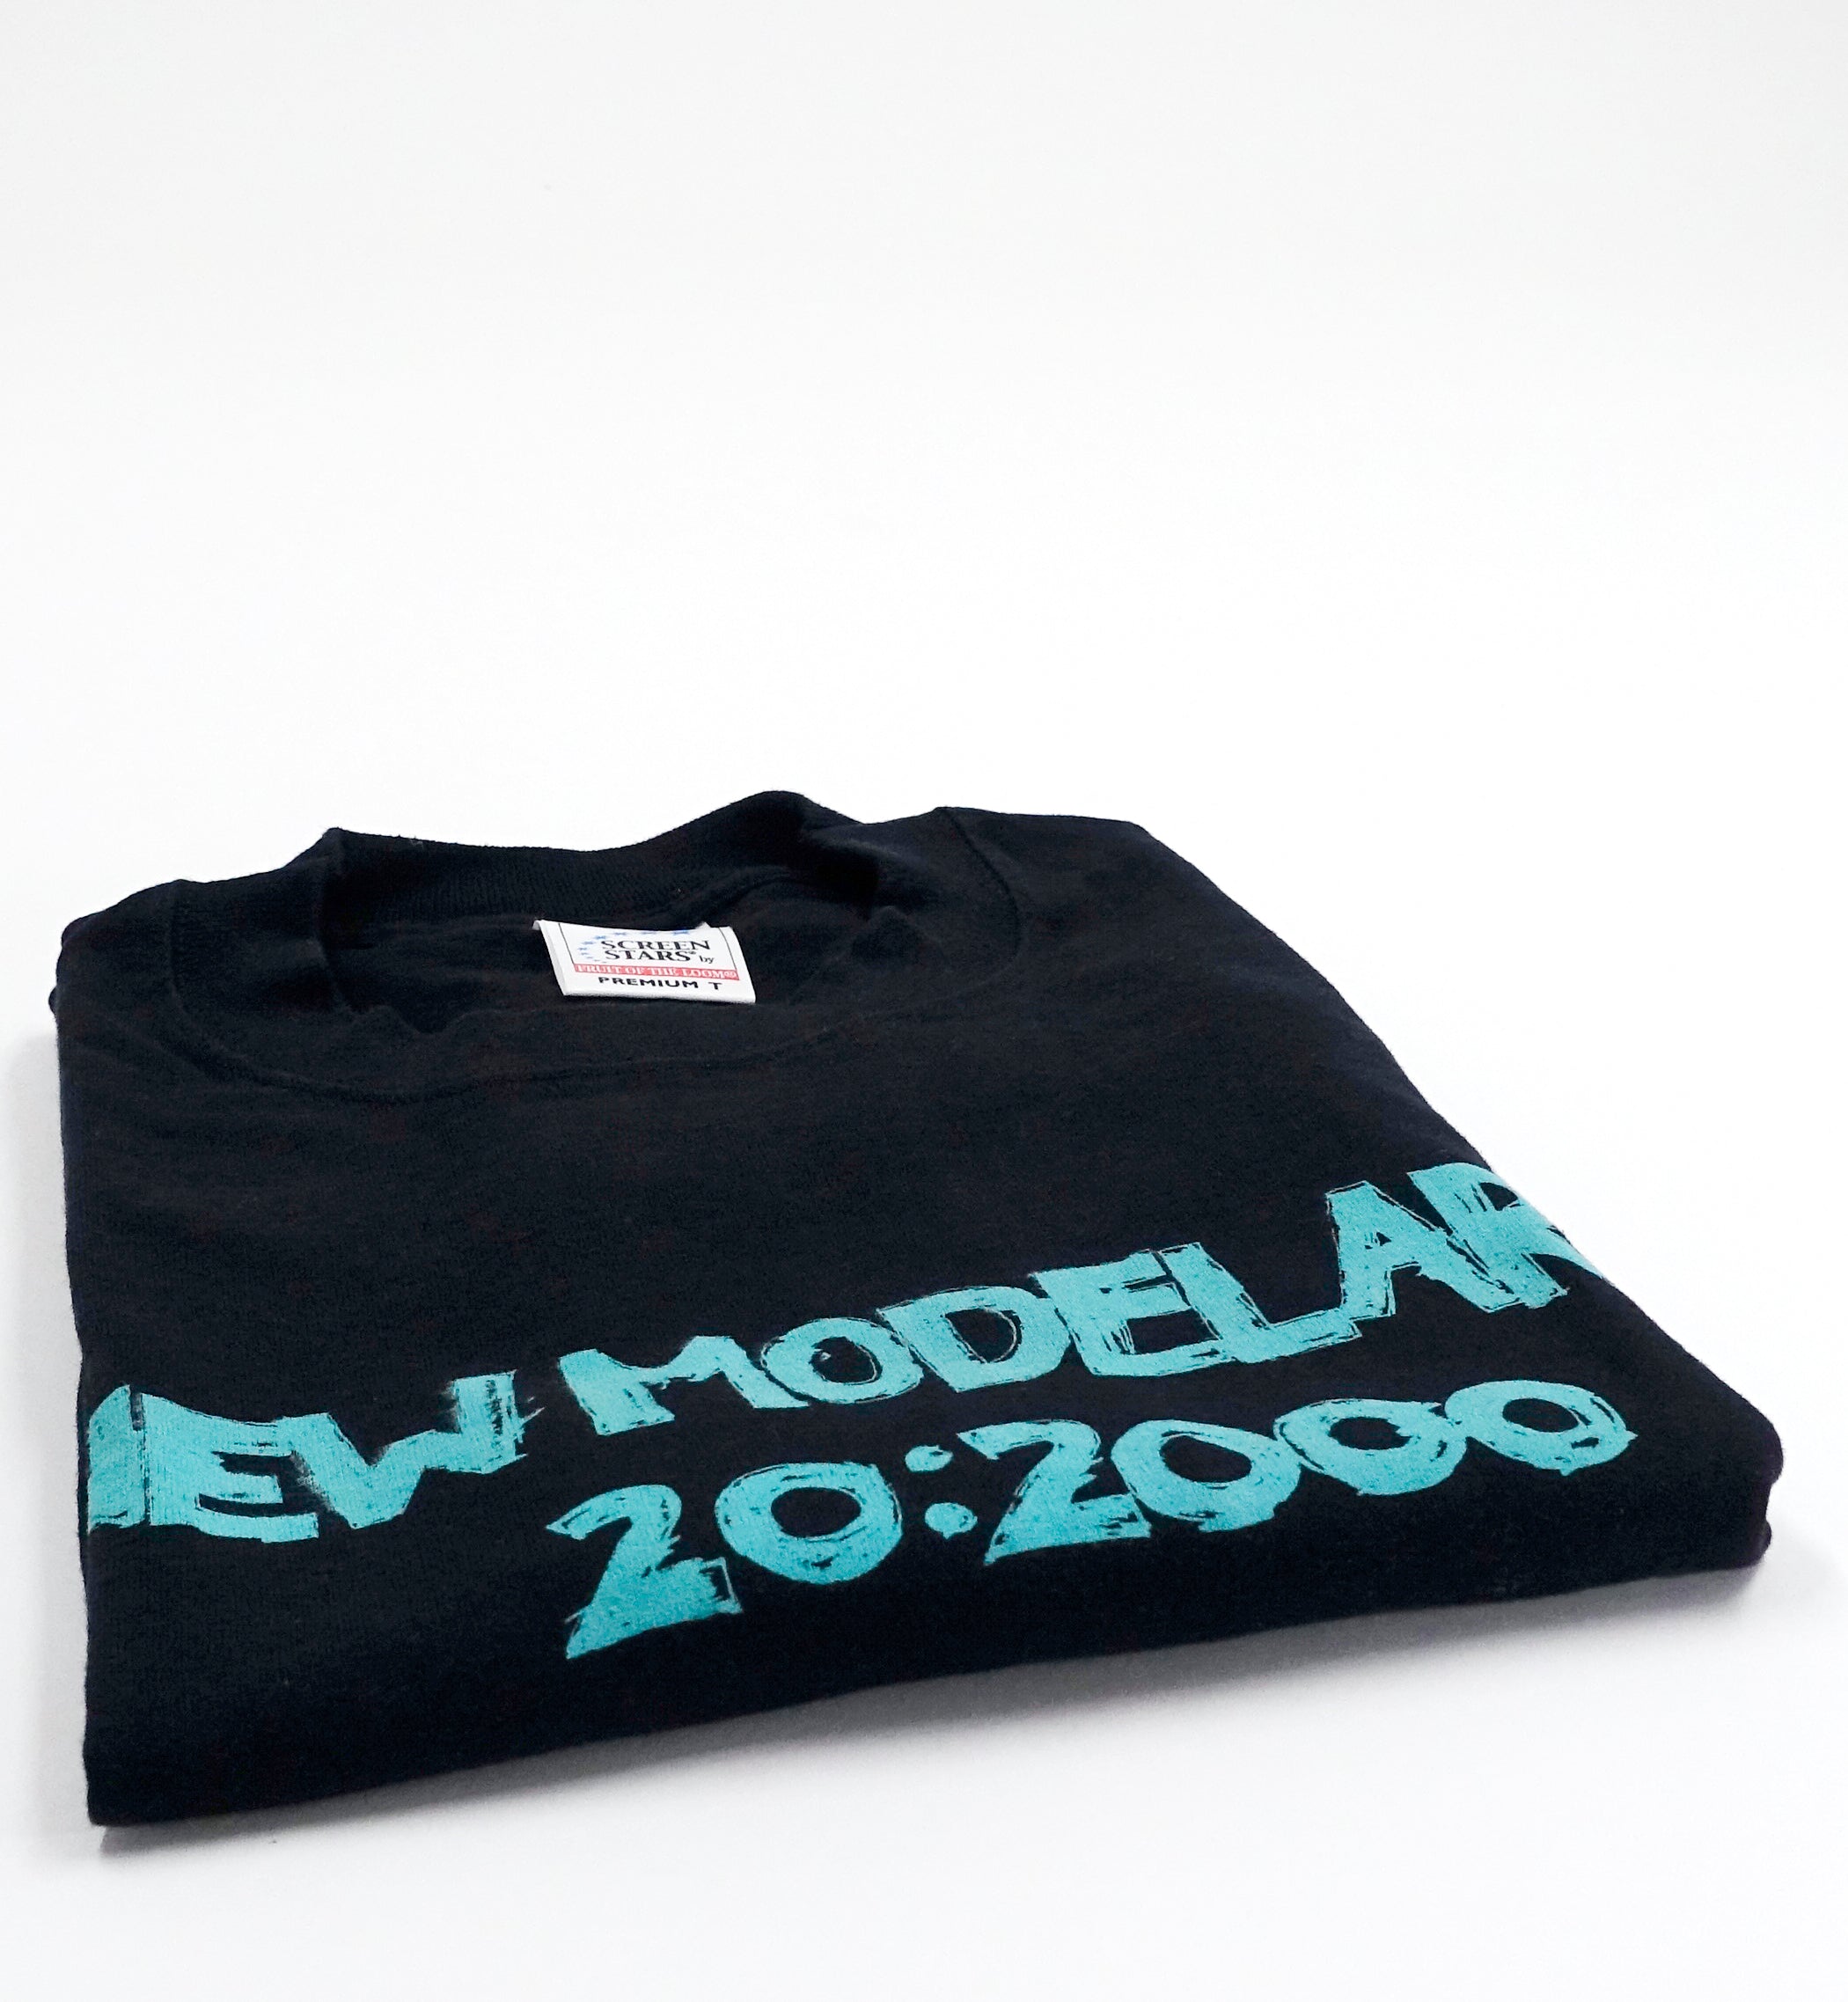 New Model Army - 20:2000 Tour Shirt Size XL